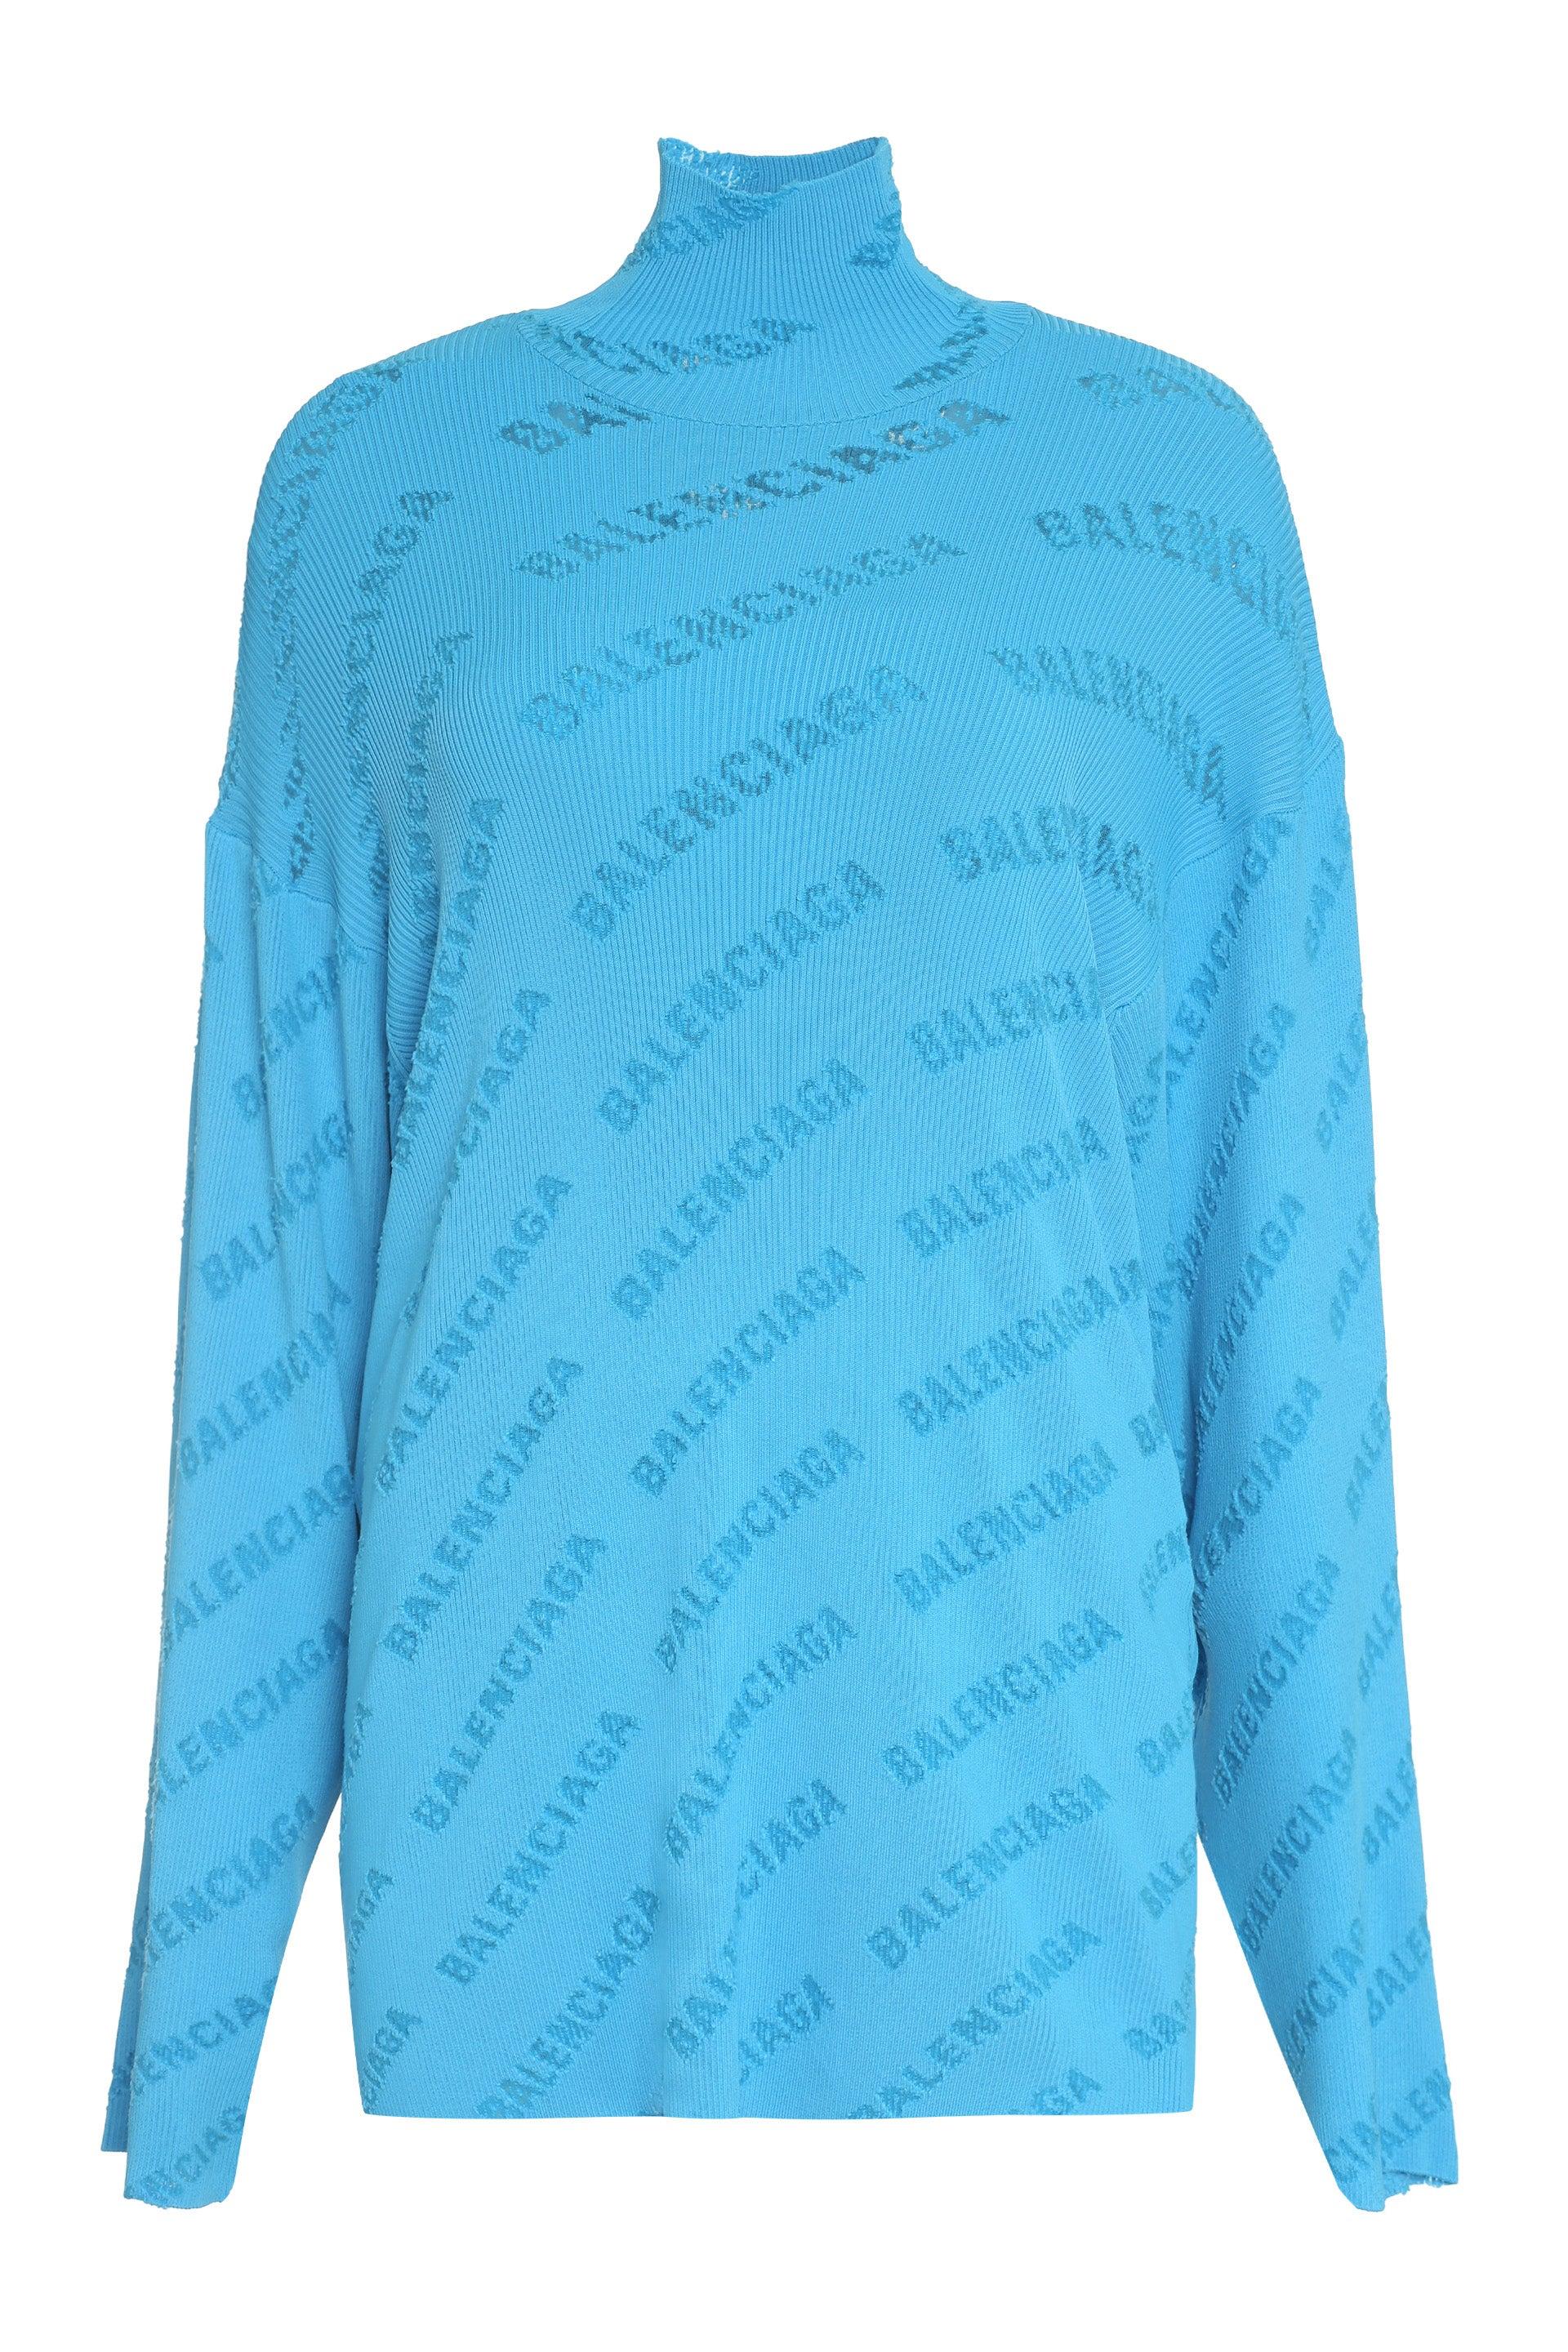 Balenciaga Turtleneck Sweater in Blue | Lyst